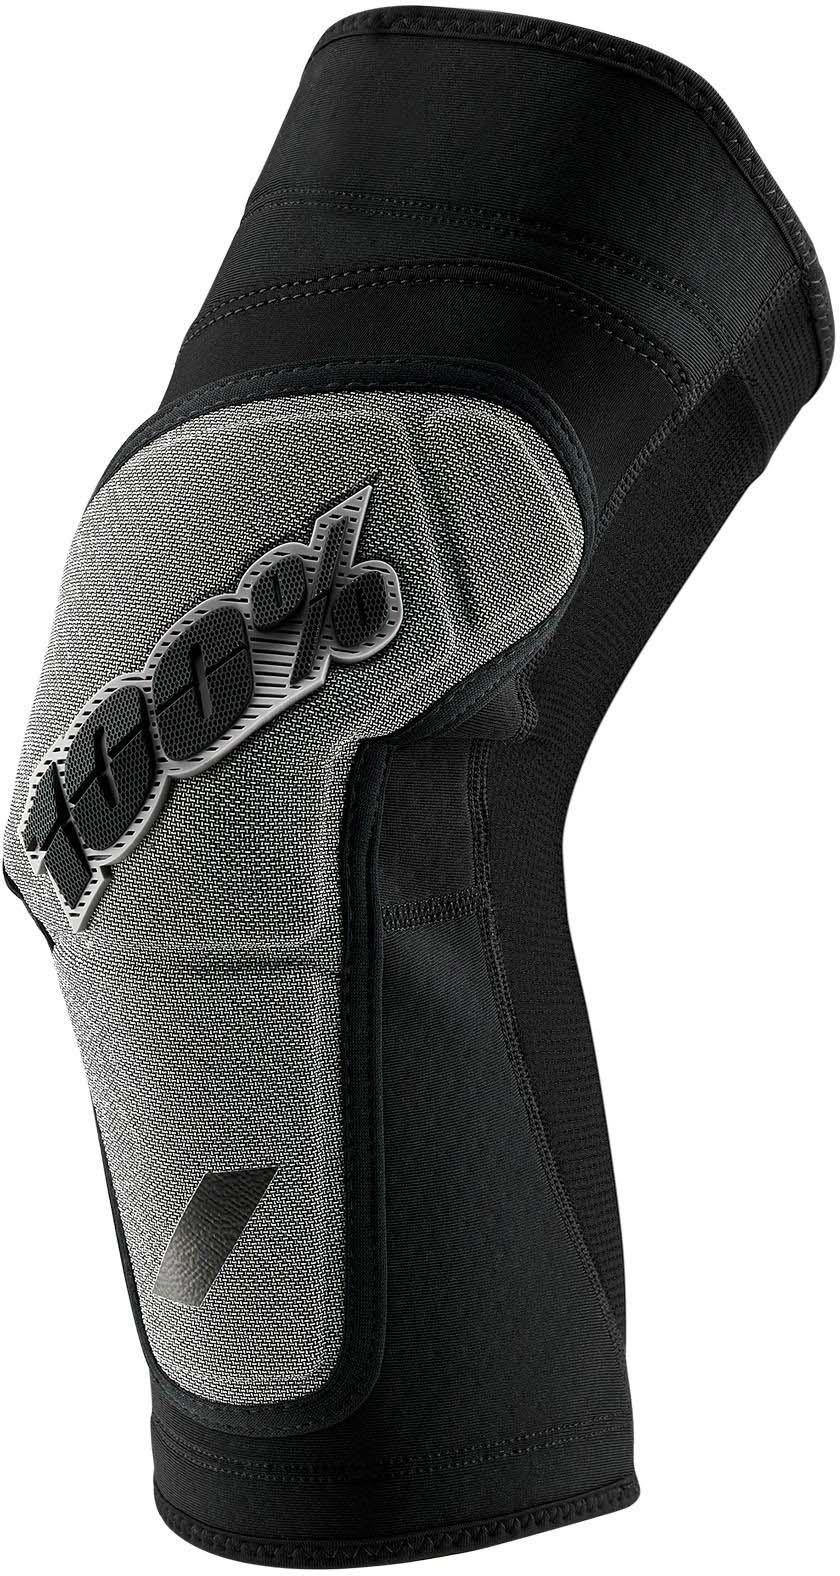 100% Ridecamp Knee Guard - Black/grey